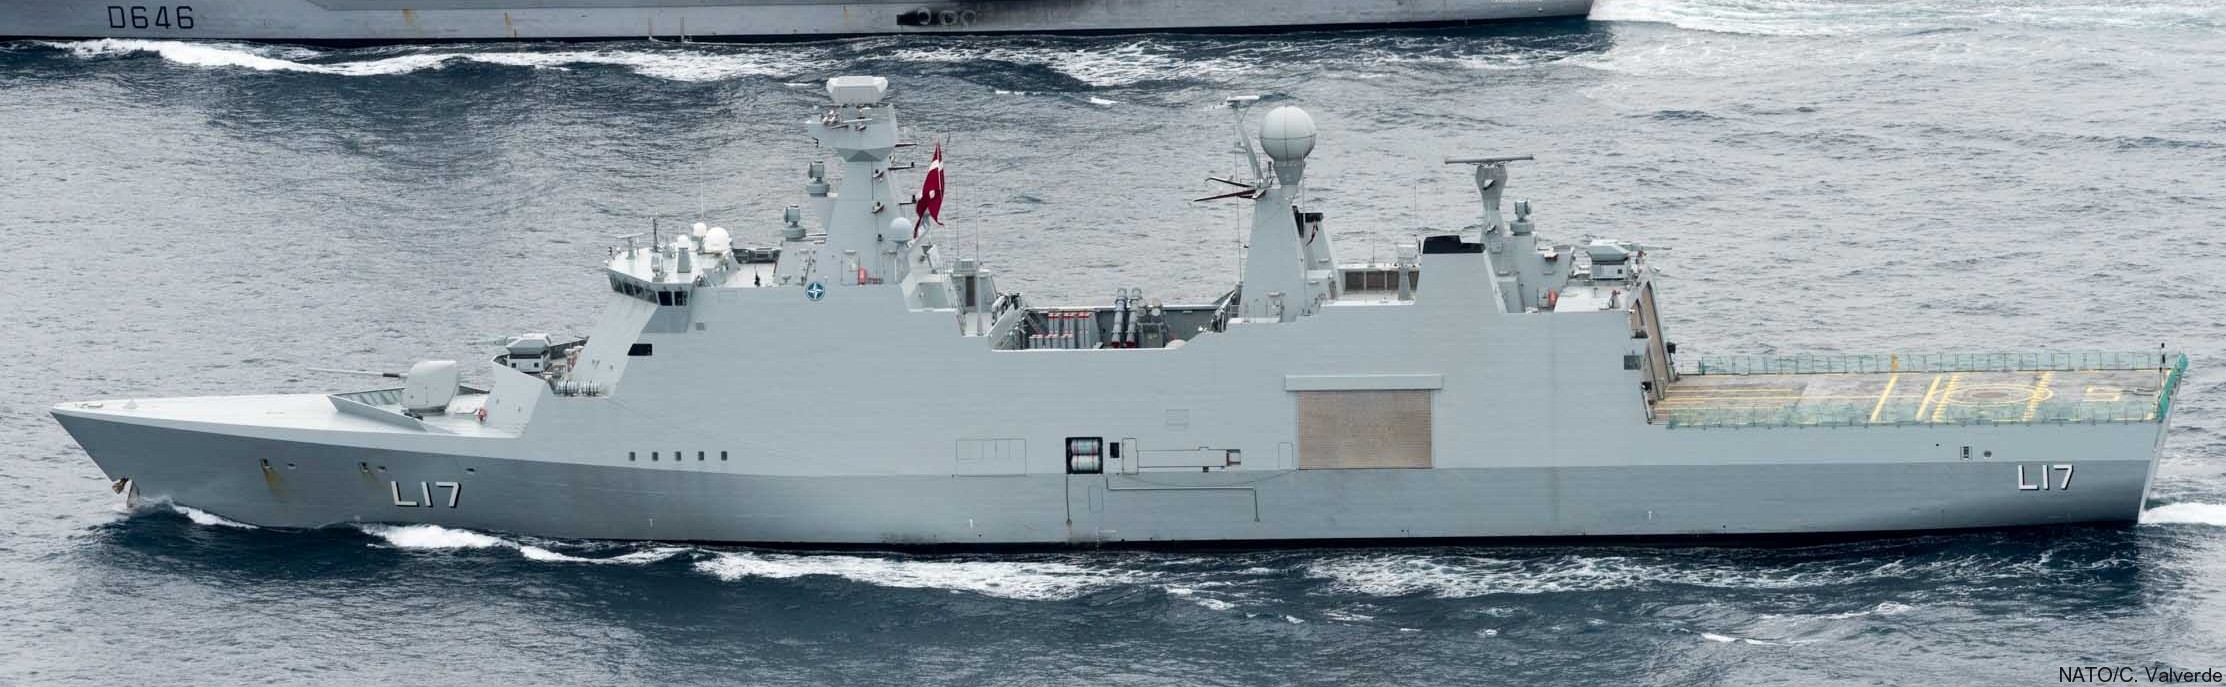 f-342 hdms esbern snare l-17 frigate command support ship royal danish navy 86